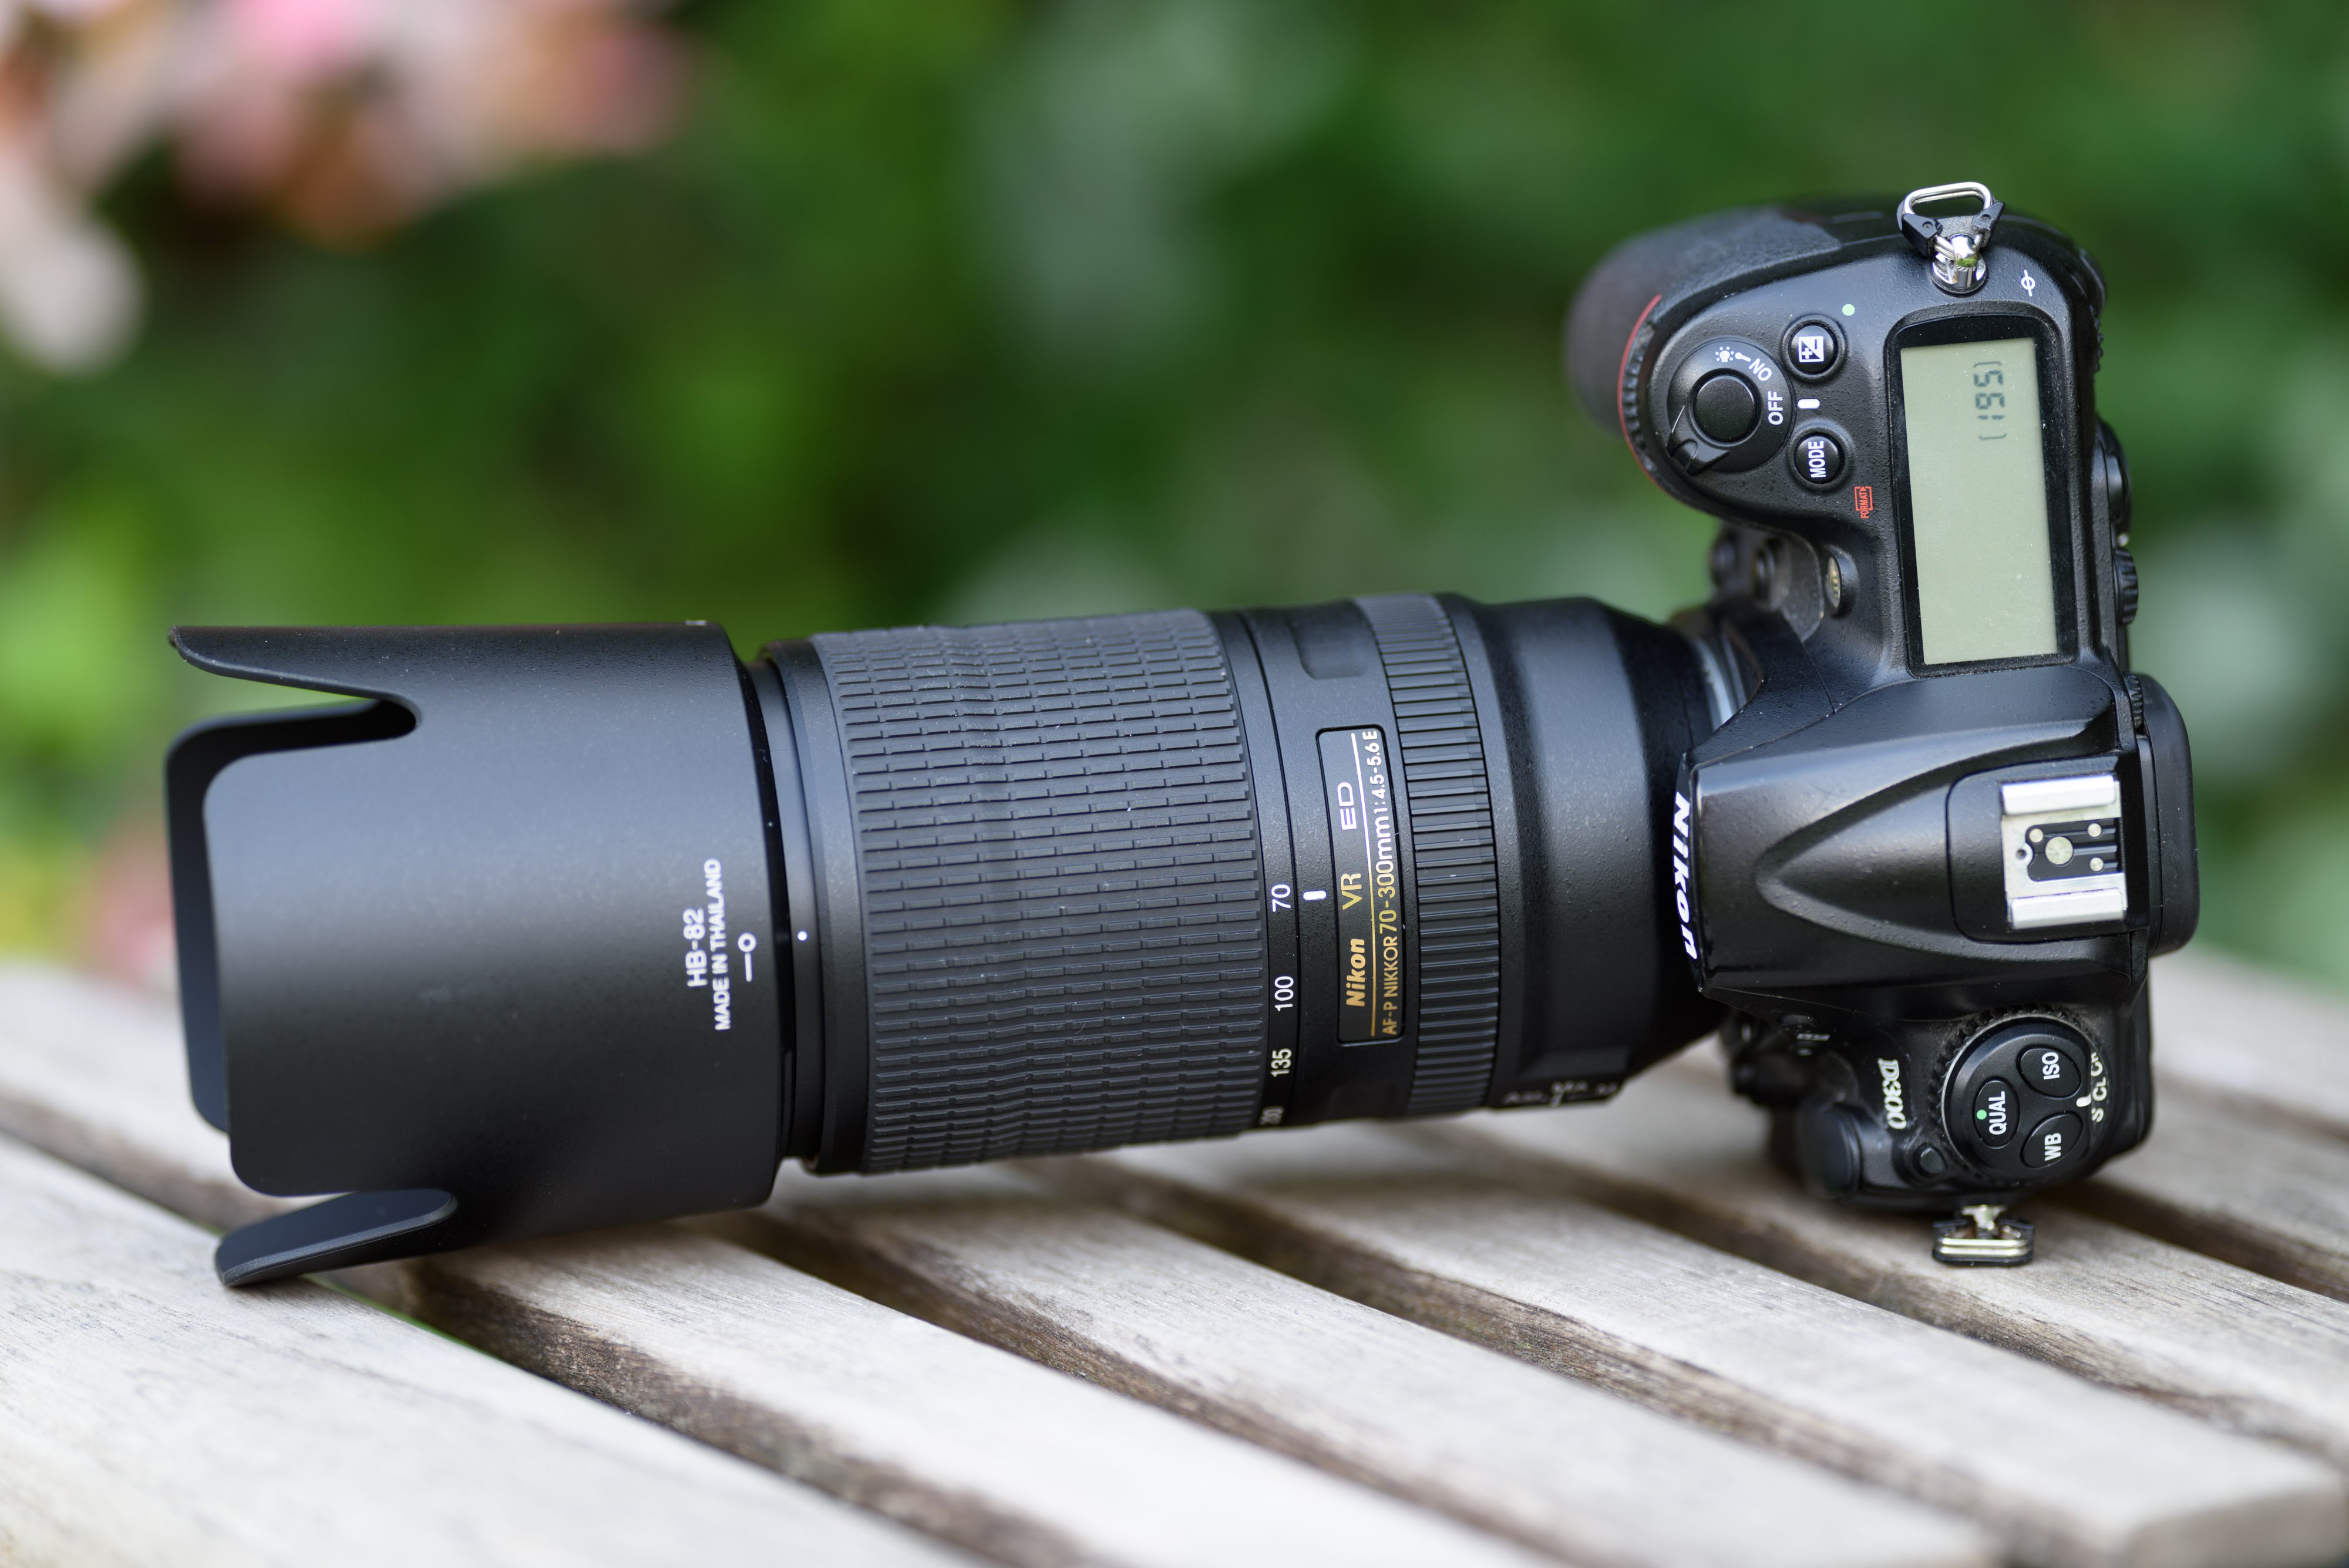 Nikon AF-P 70-300mm f4.5-5.6E VR review | Cameralabs